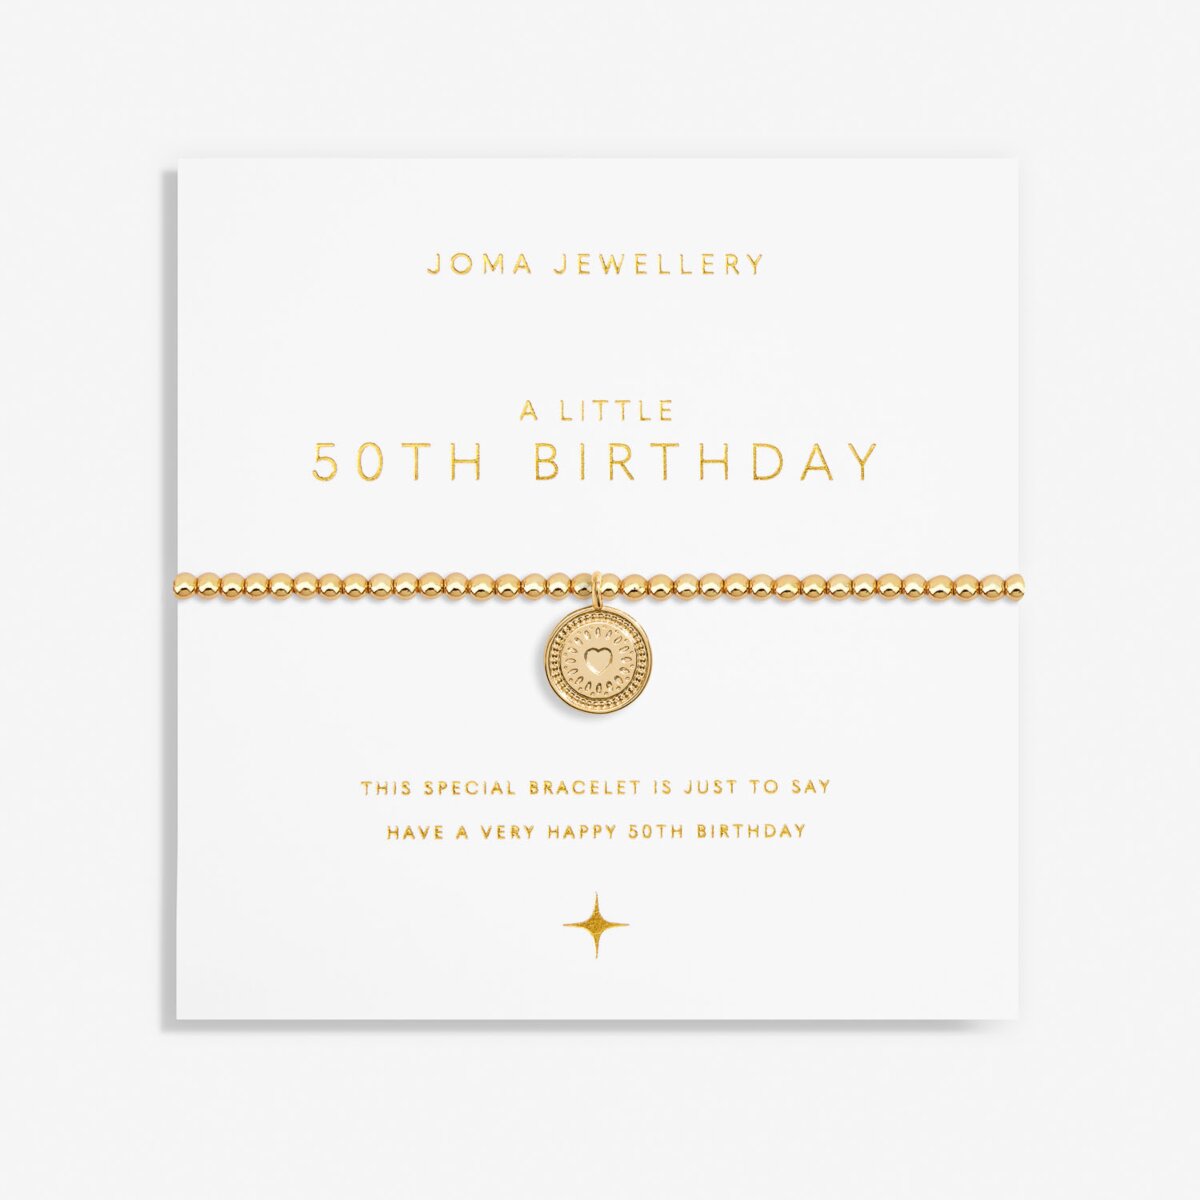 JOMA JEWELLERY | A LITTLE GOLD | 50TH BIRTHDAY BRACELET